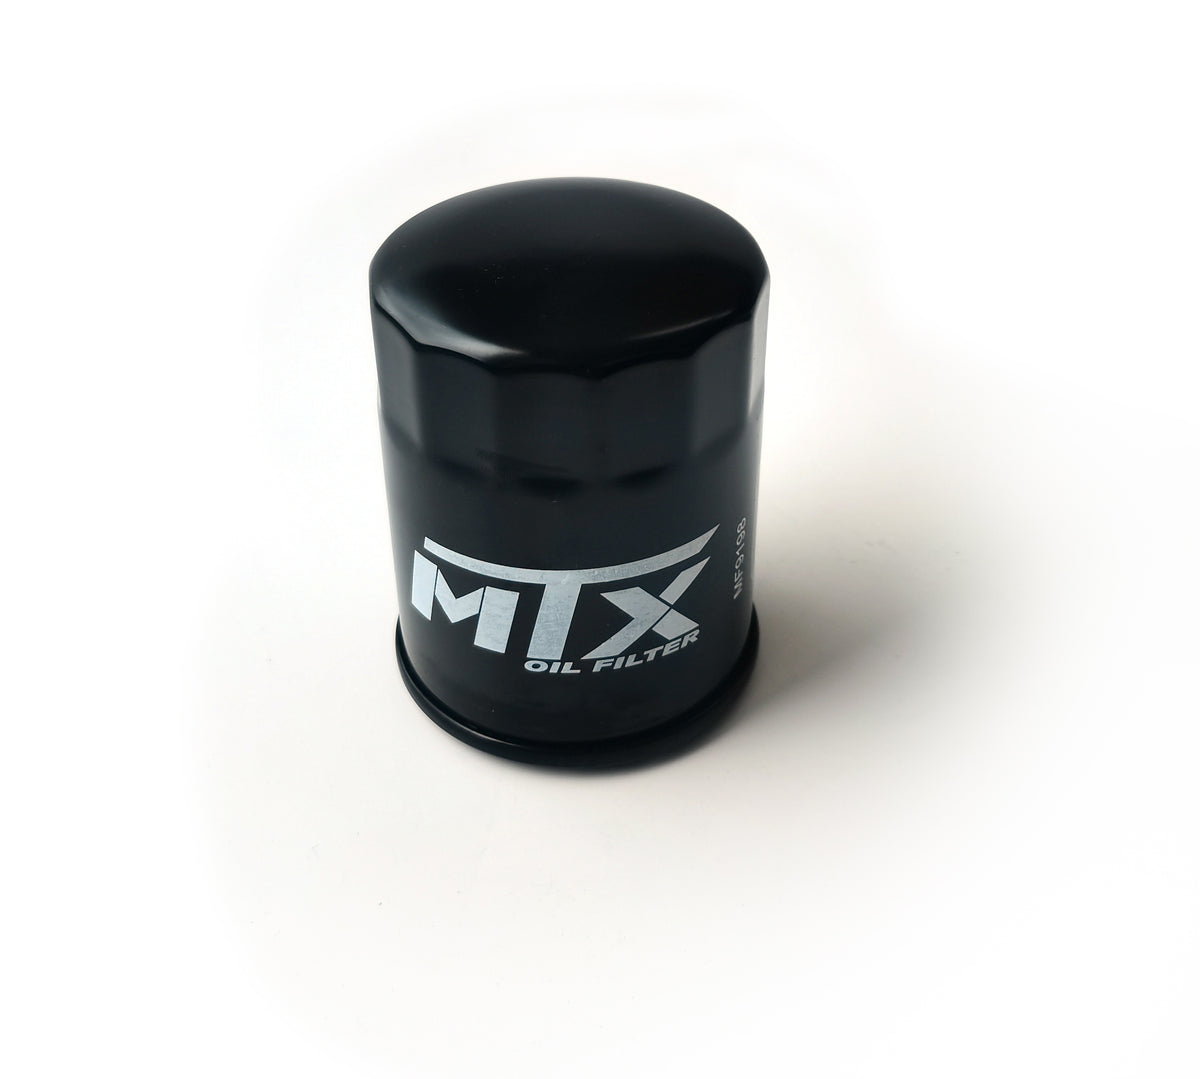 MTX Oil Filter 198